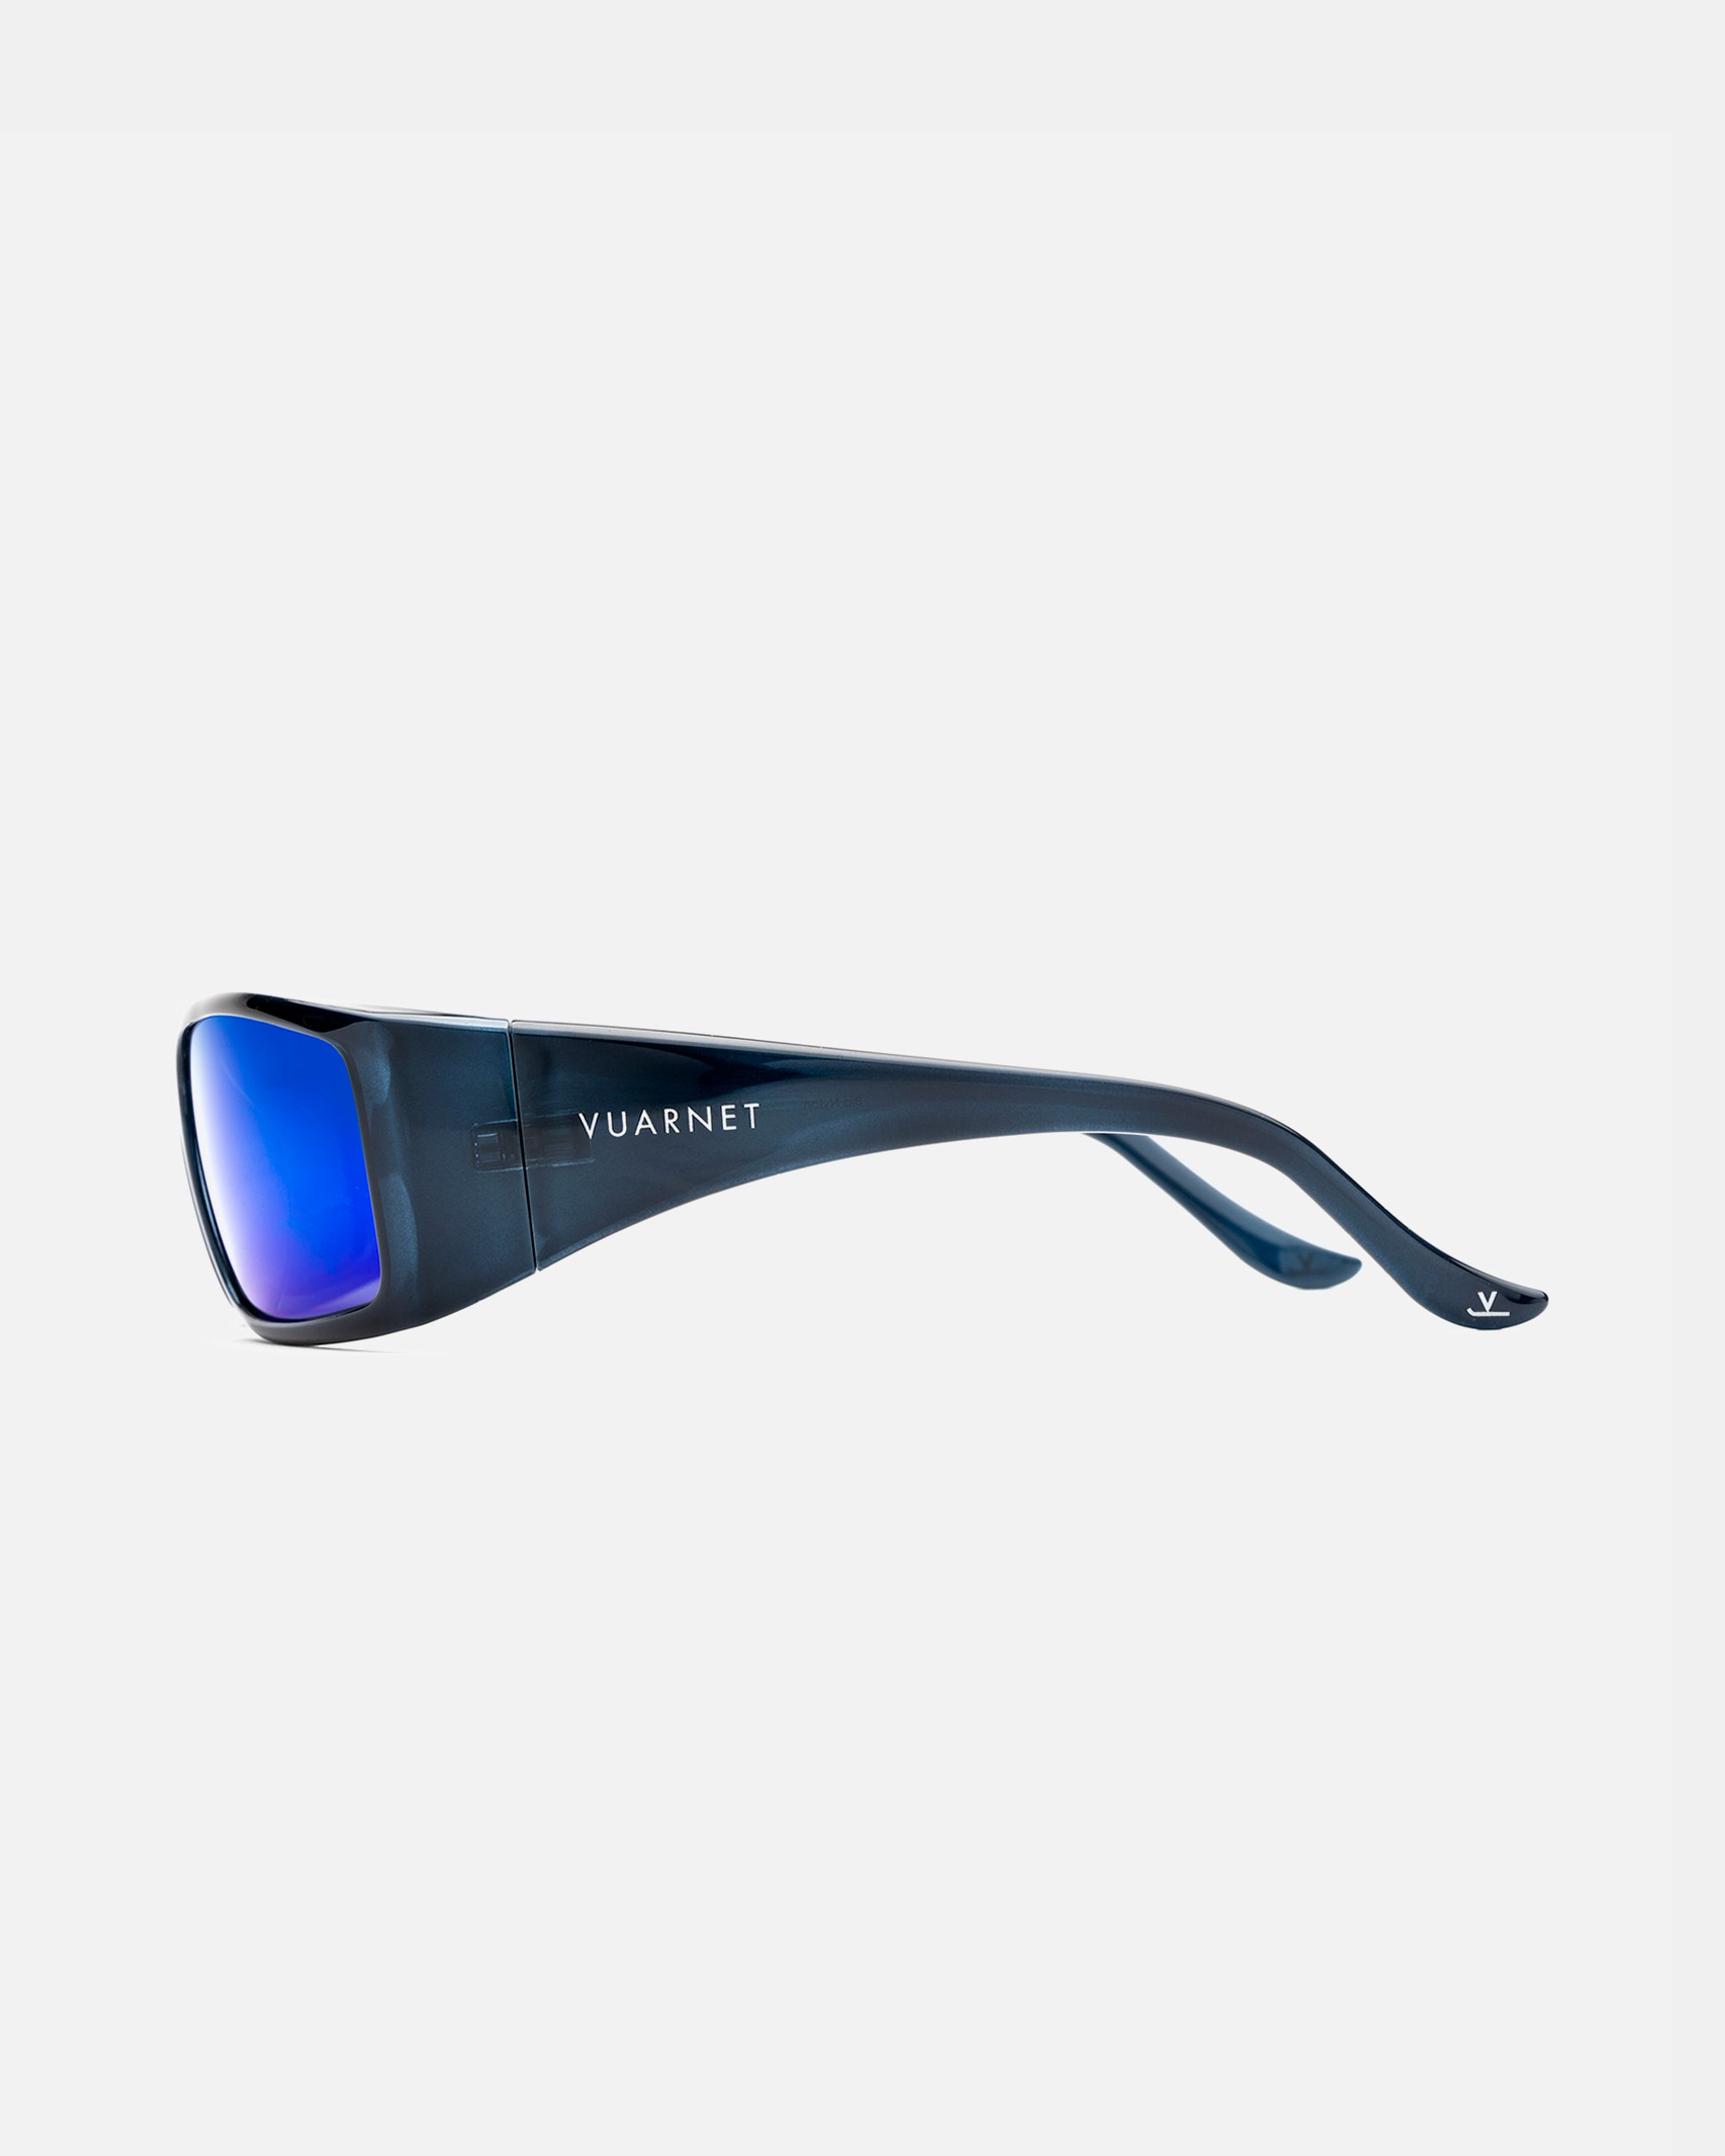 Goggles Sunglasses Ray-Ban Vuarnet, Sunglasses, fashion, black, glasses png  | PNGWing